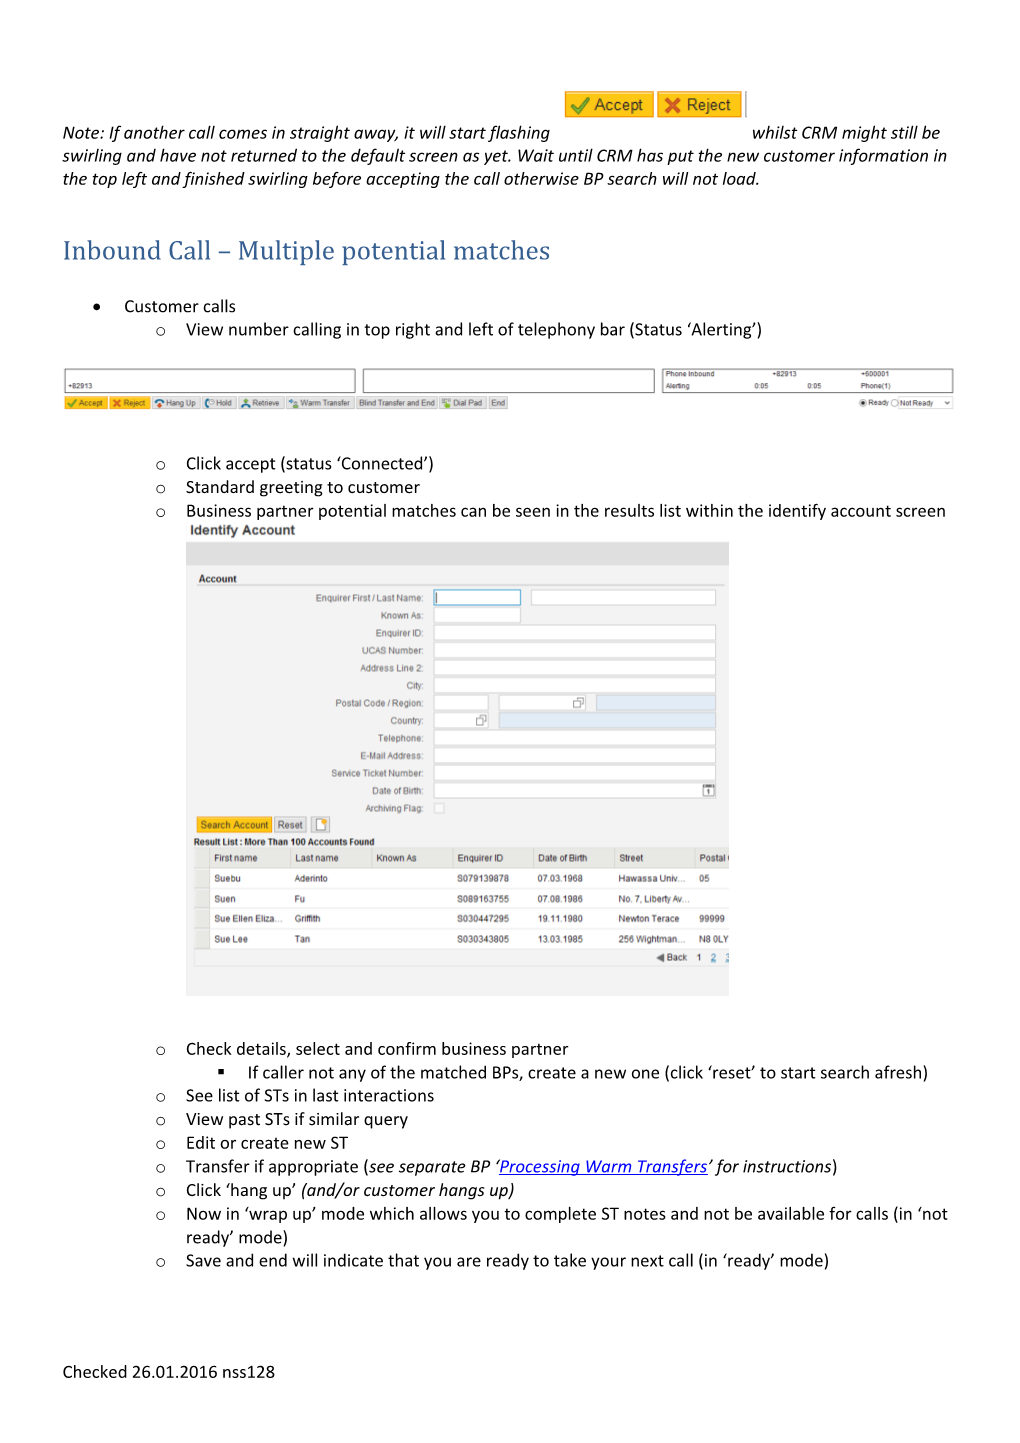 SAP Contact Centre / CRM: Receive an Inbound Call